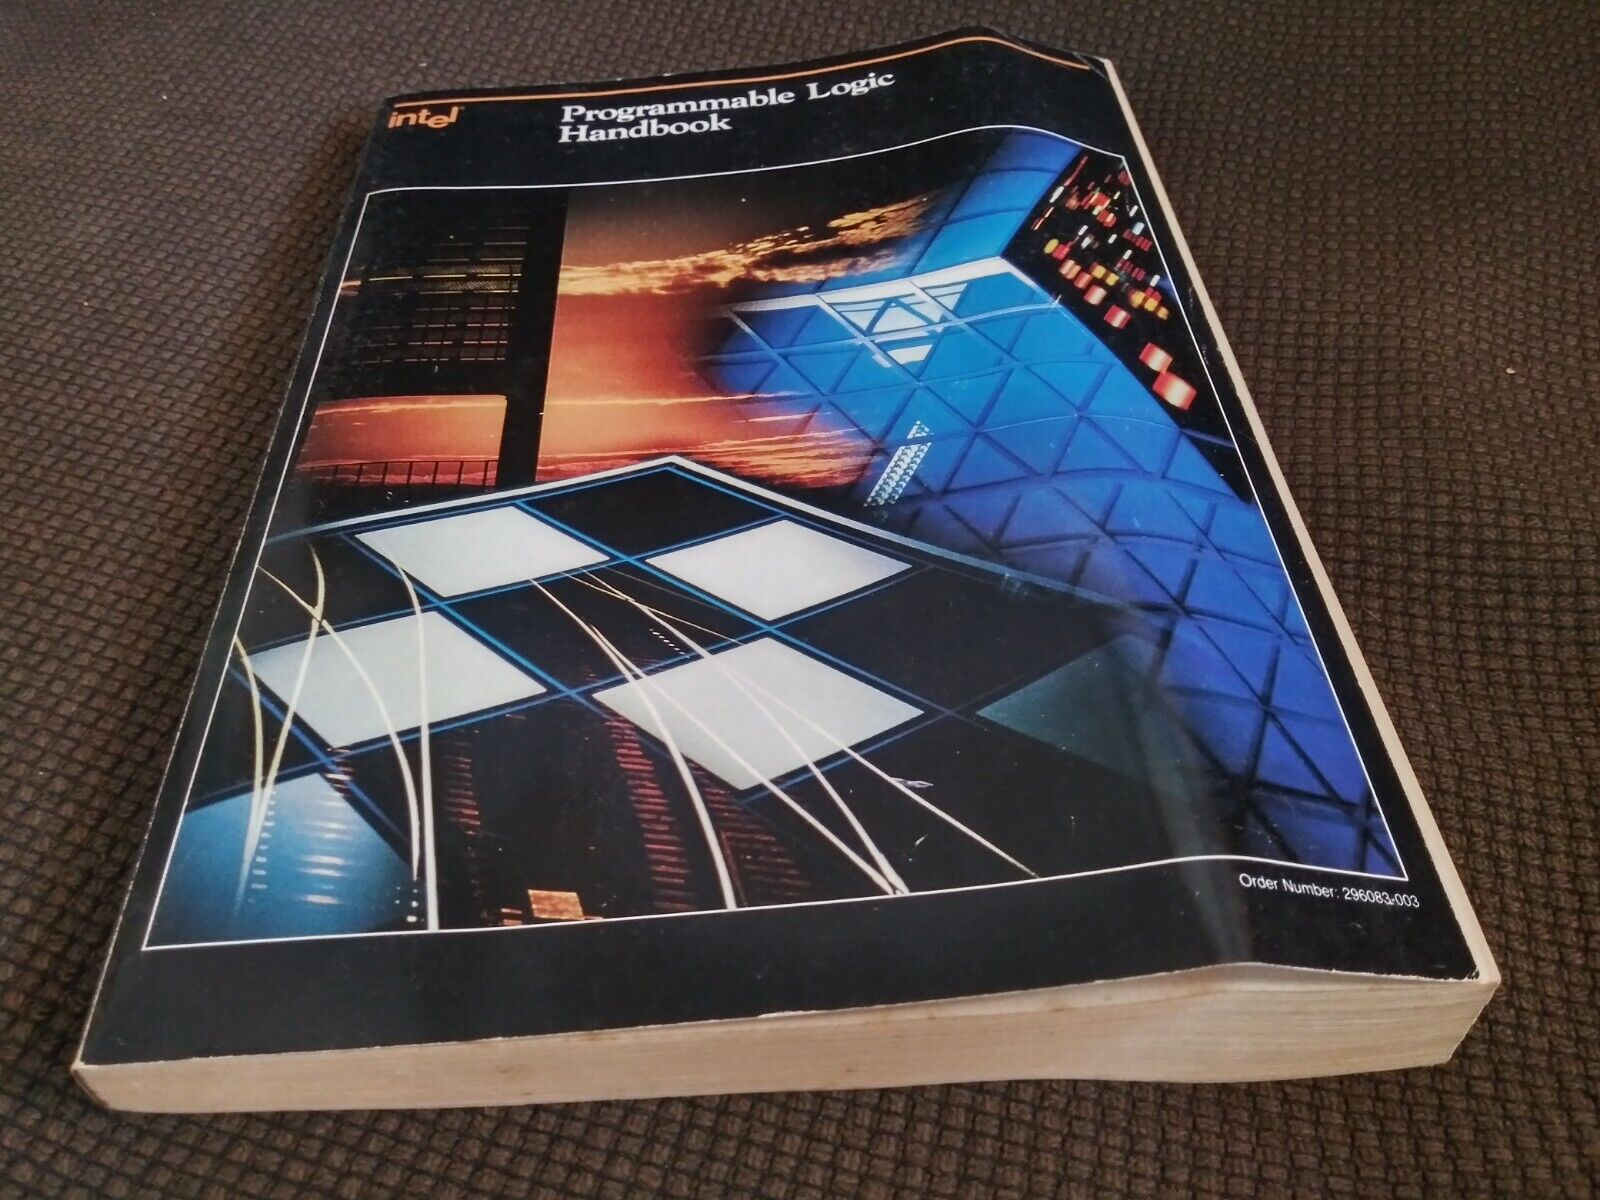 Intel Programmable Logic Handbook 1988 Vintage Computer Manual